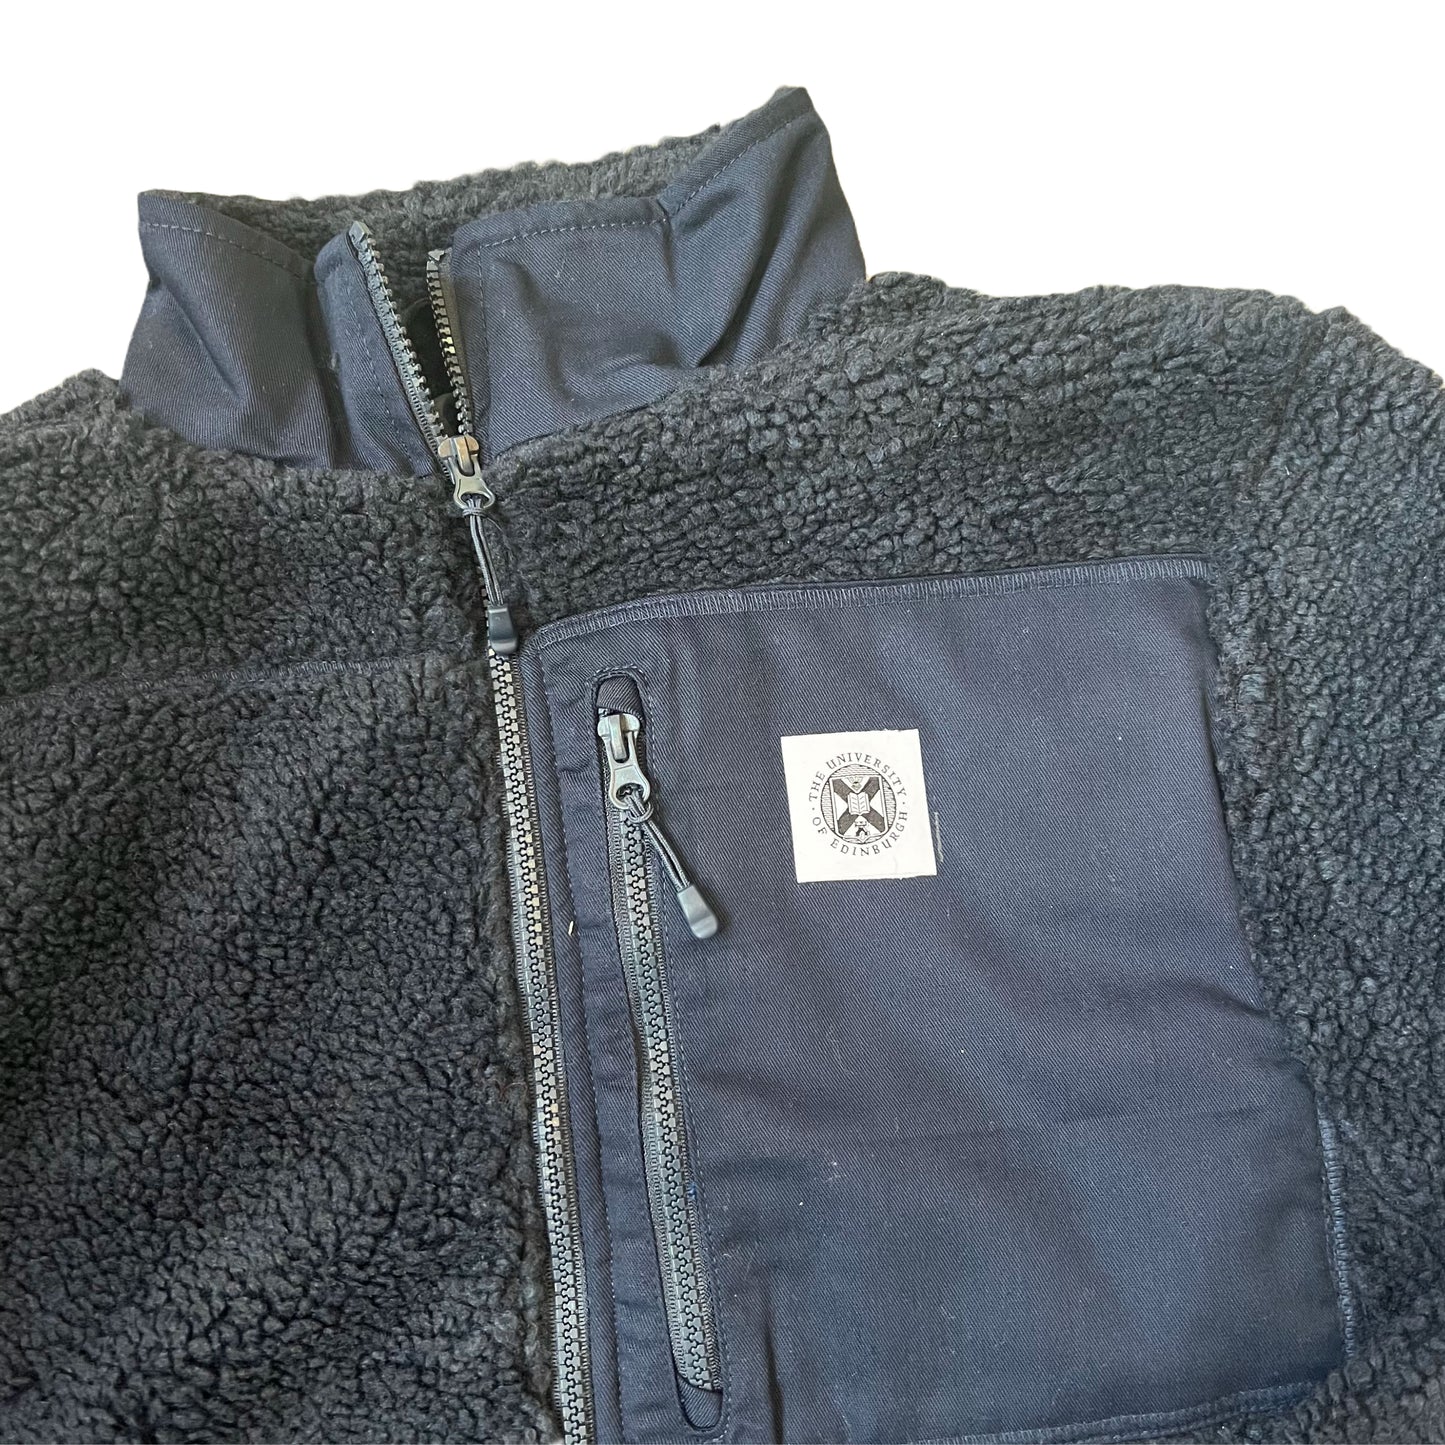 Closeup of pocket with stitched university crest label on navy fleece sherpa jacket.